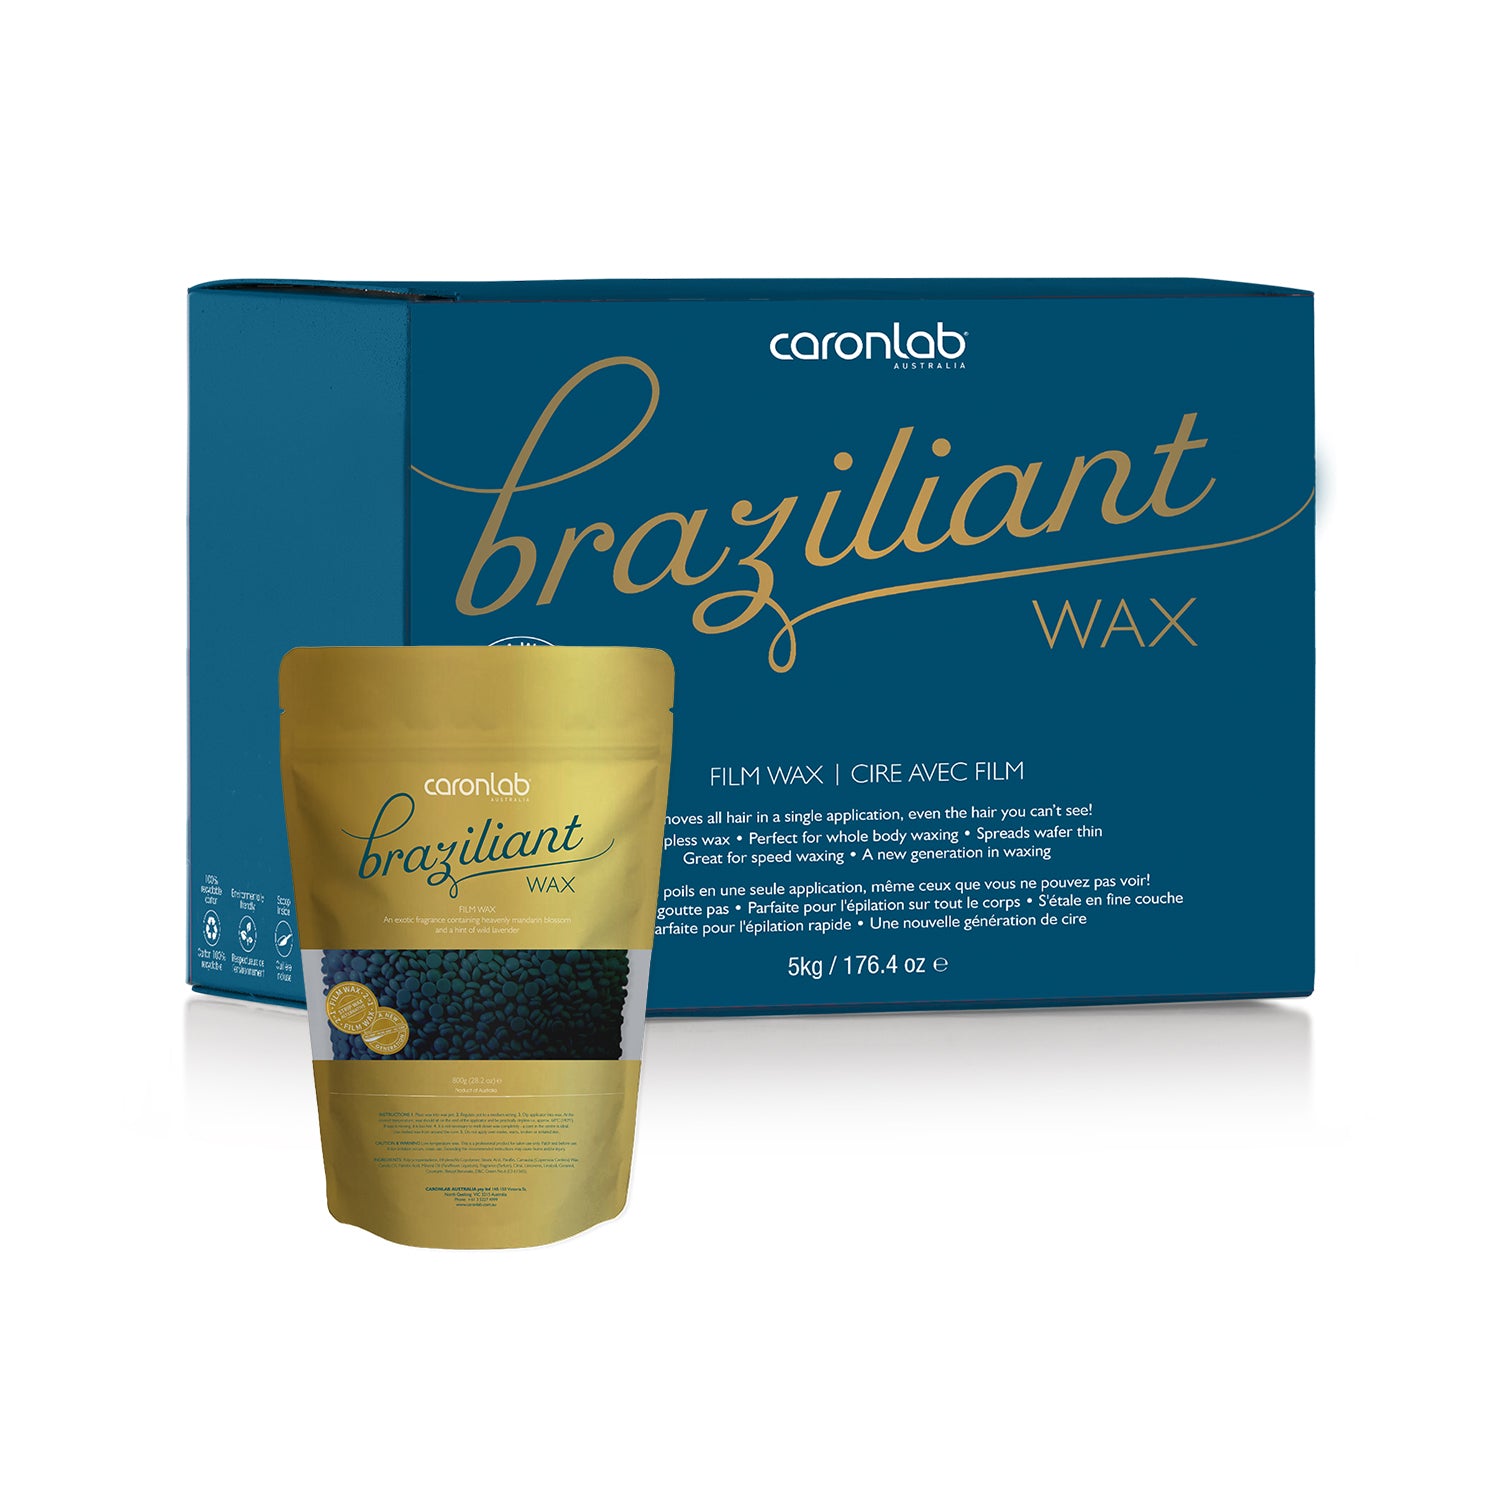 Caronlab - Brazilliant Film Wax Beads - Creata Beauty - Professional Beauty Products